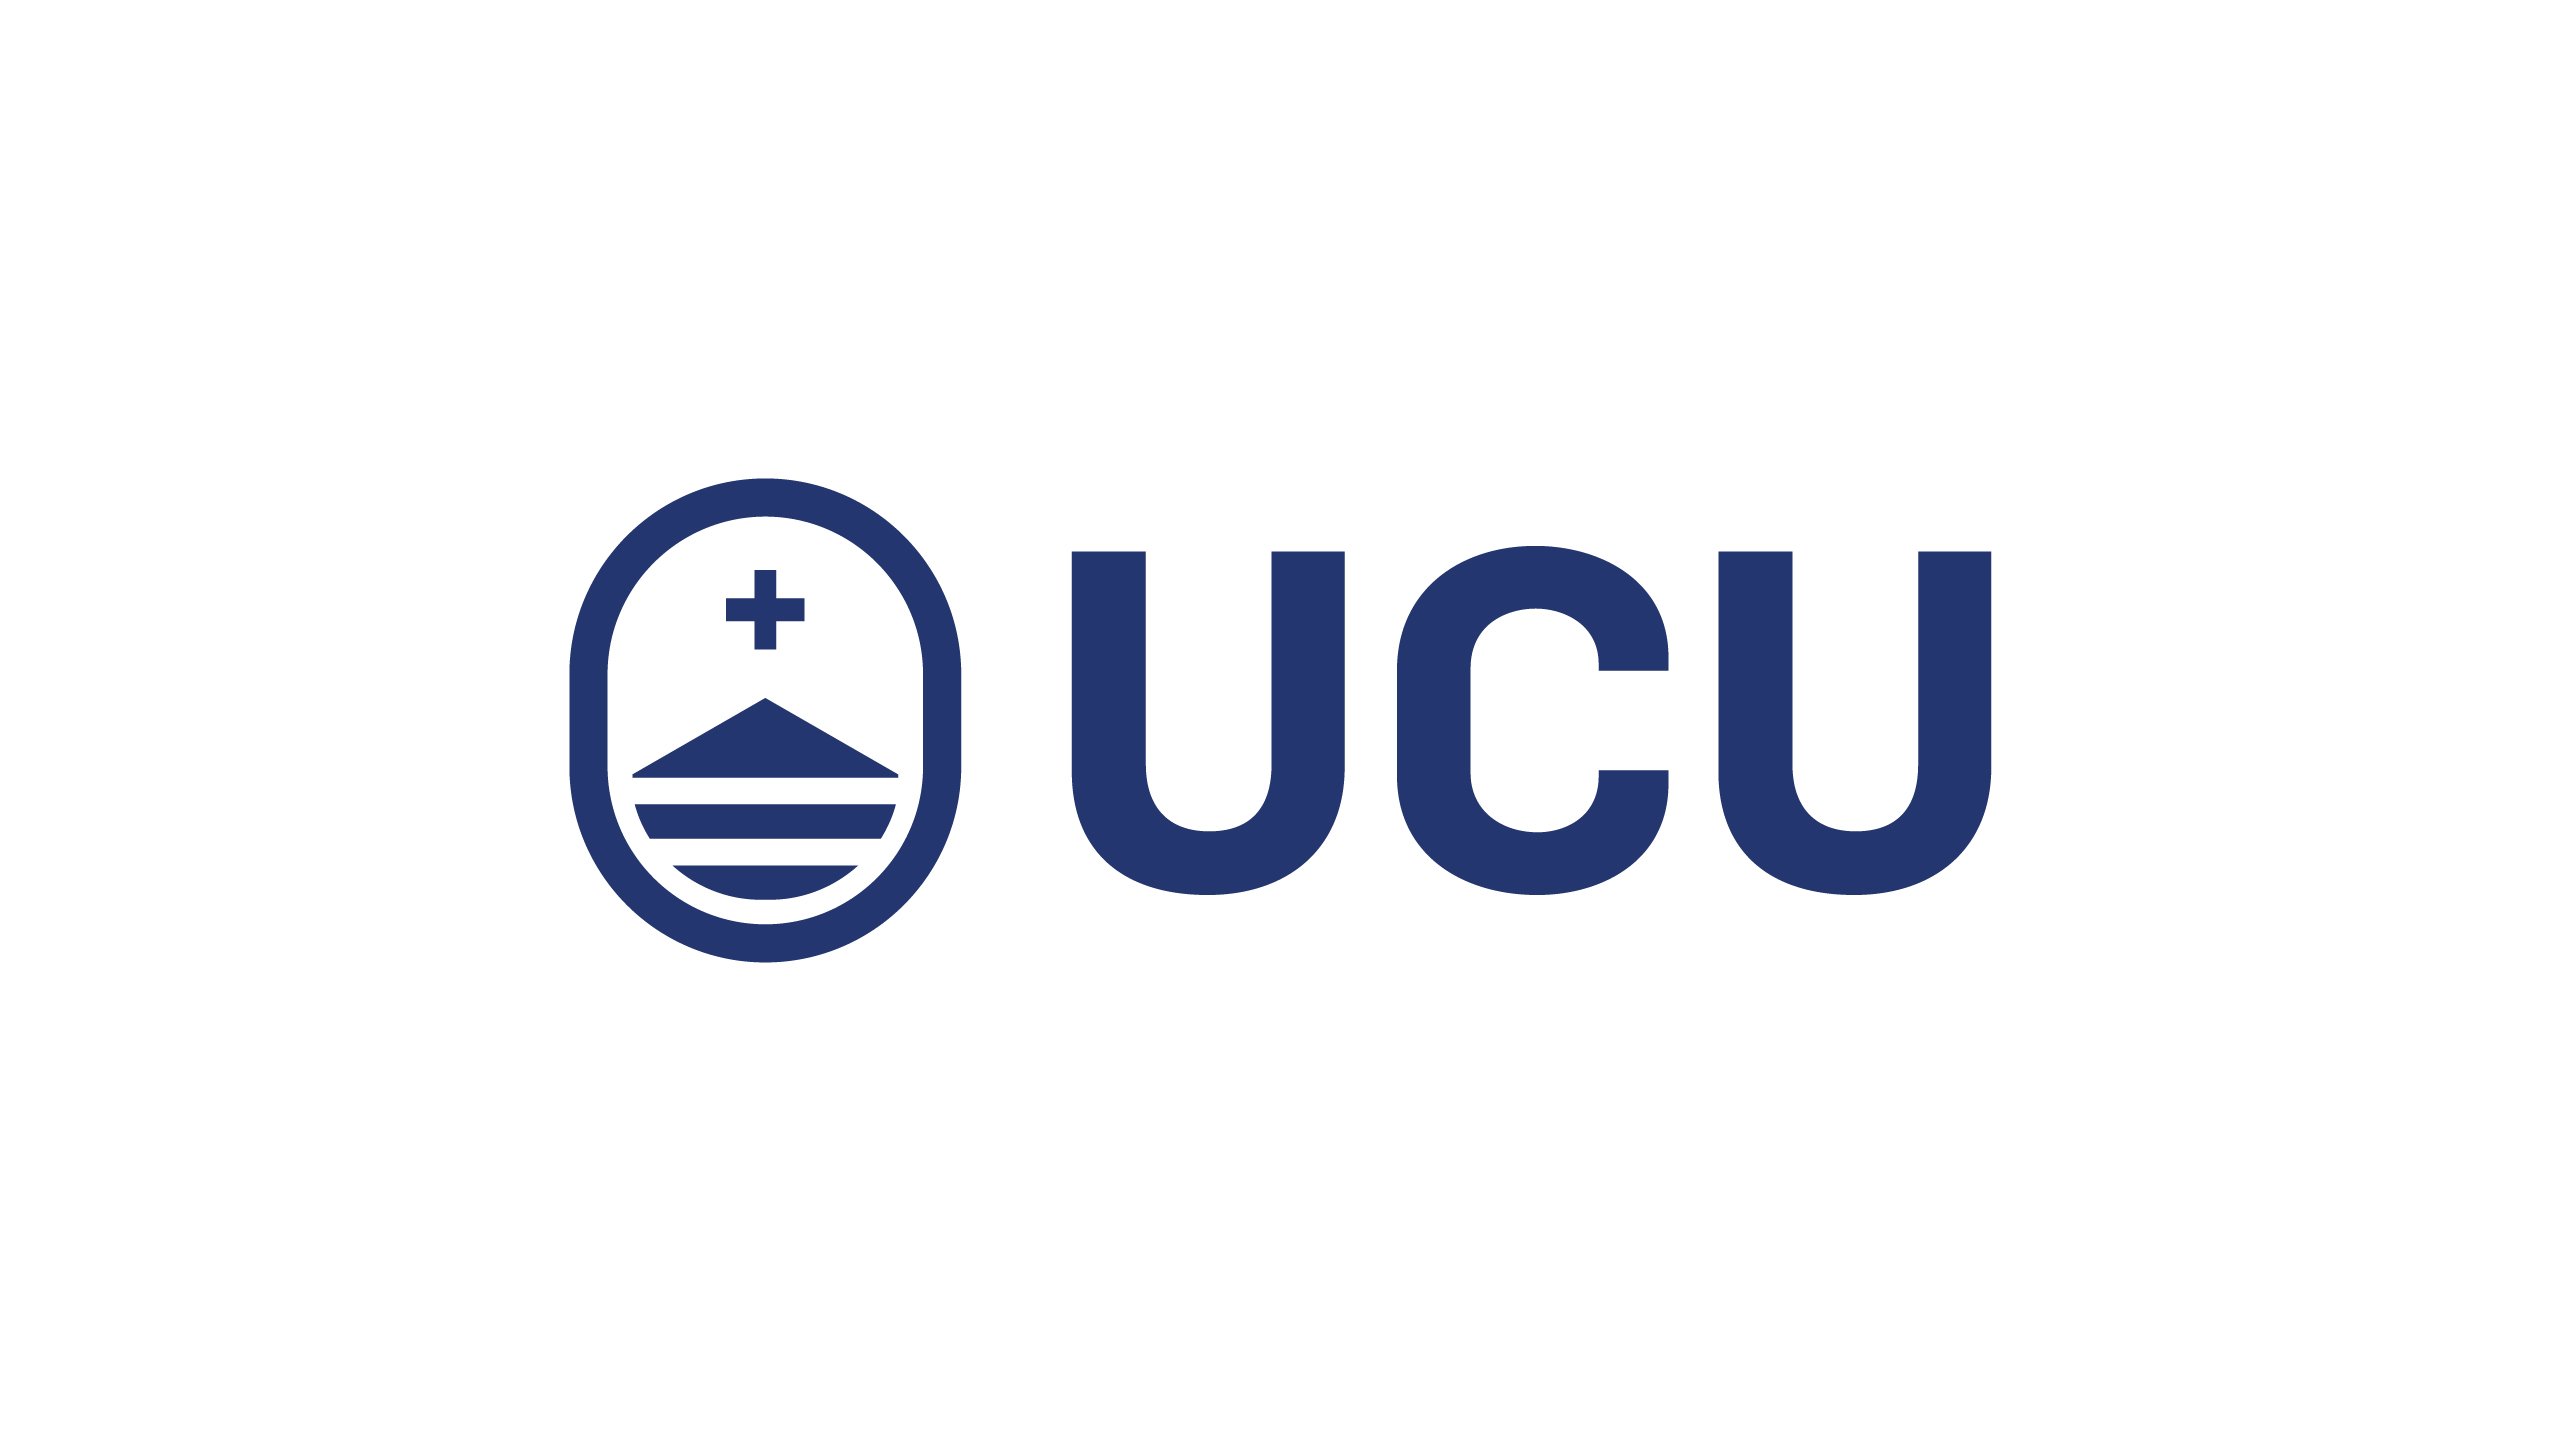 Logo Ucu 001 Final 02